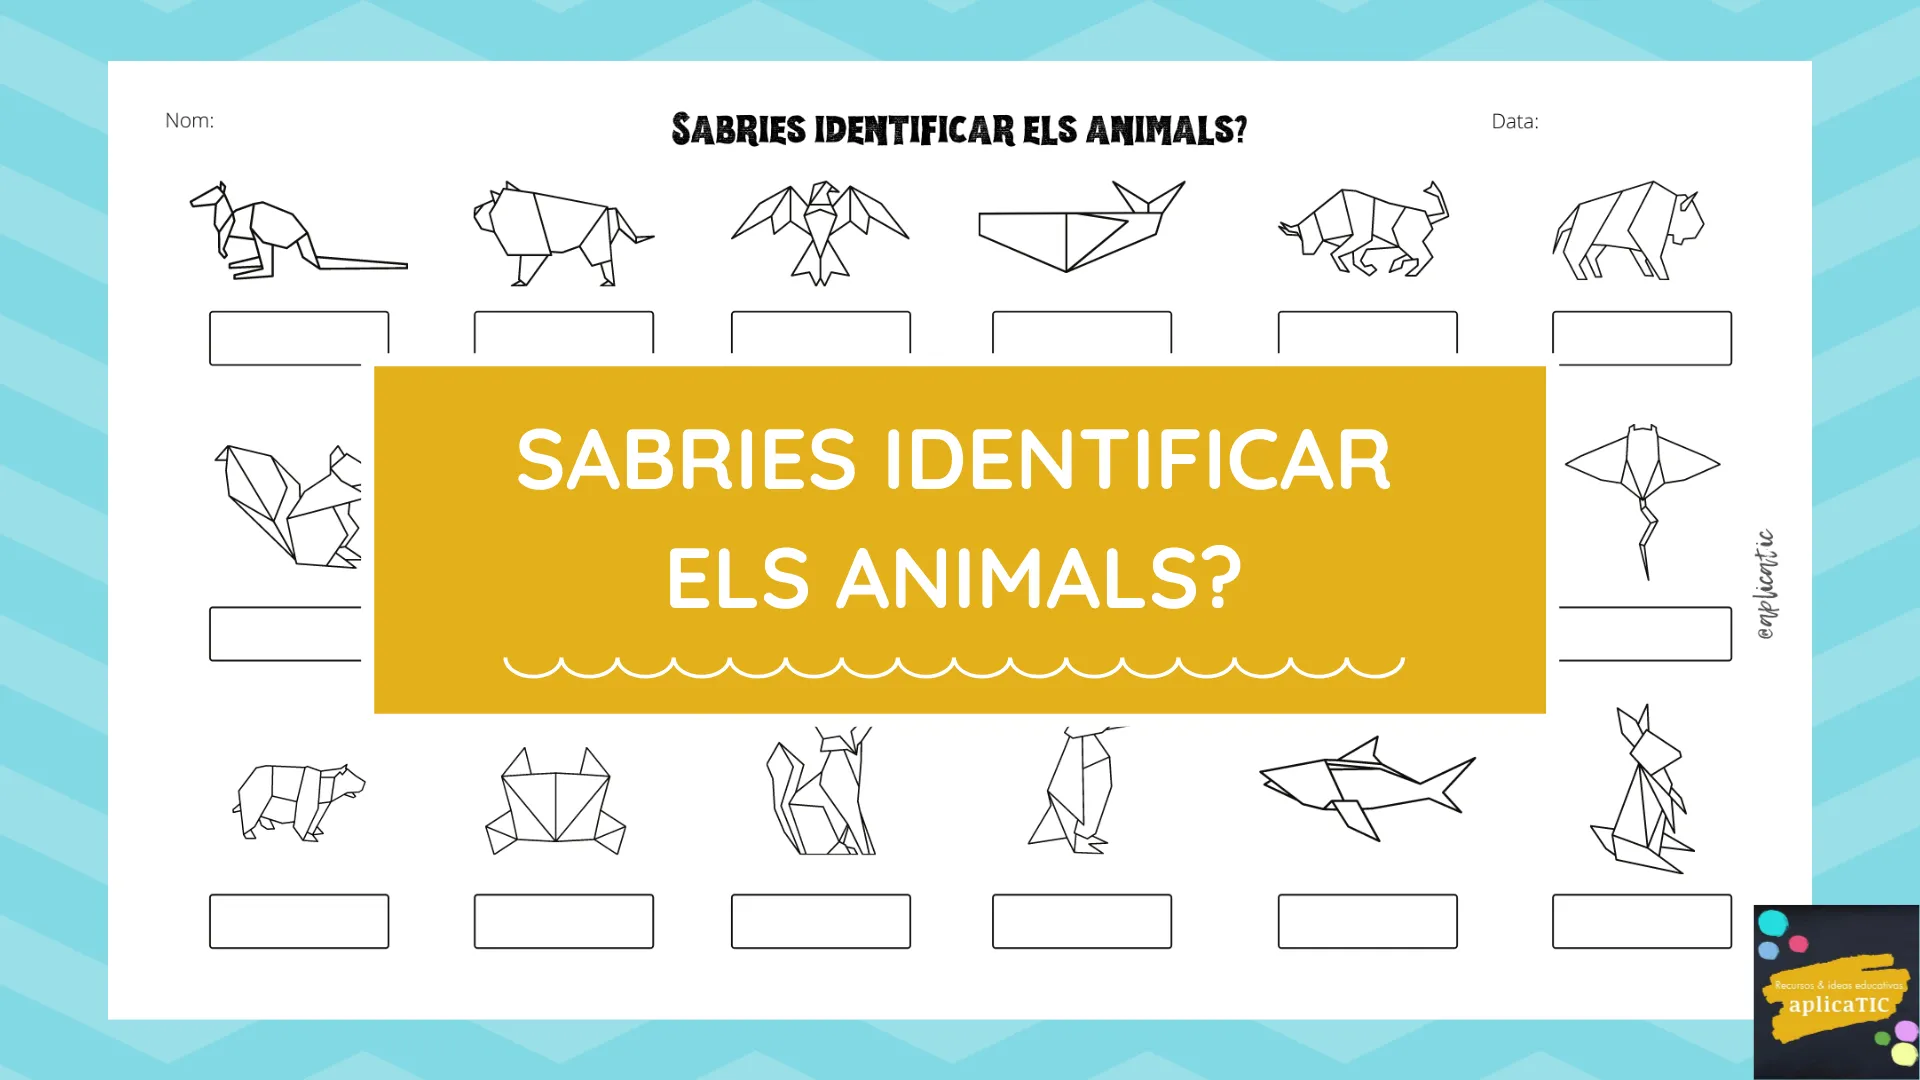 Sabries identificar els animals?